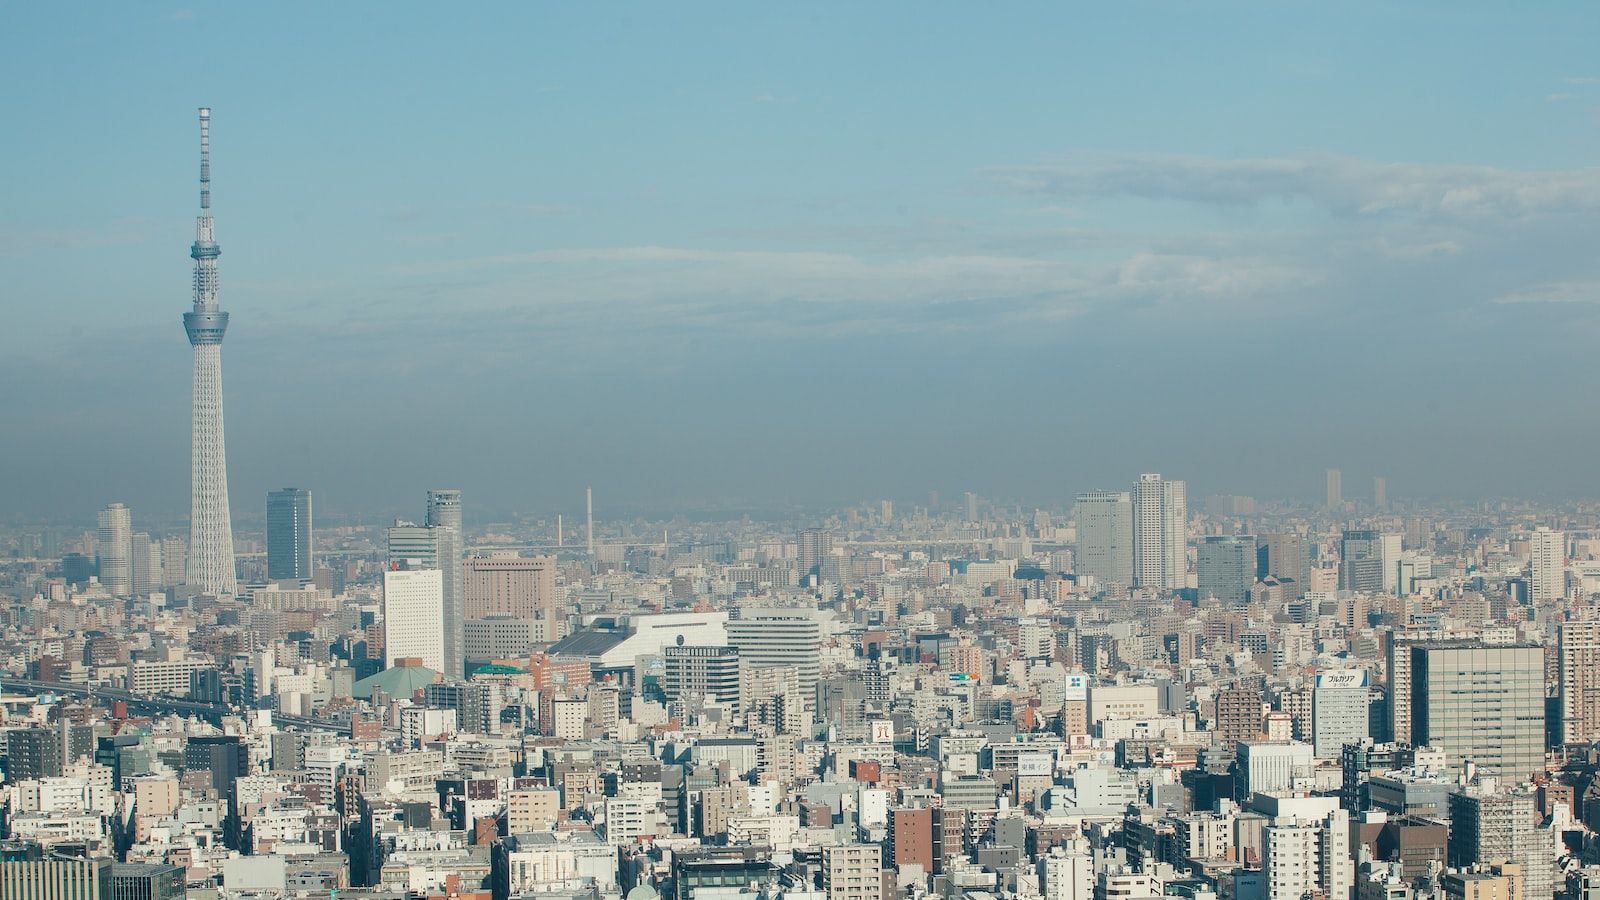 Tokyo Skytree, Japan - Point Hacks